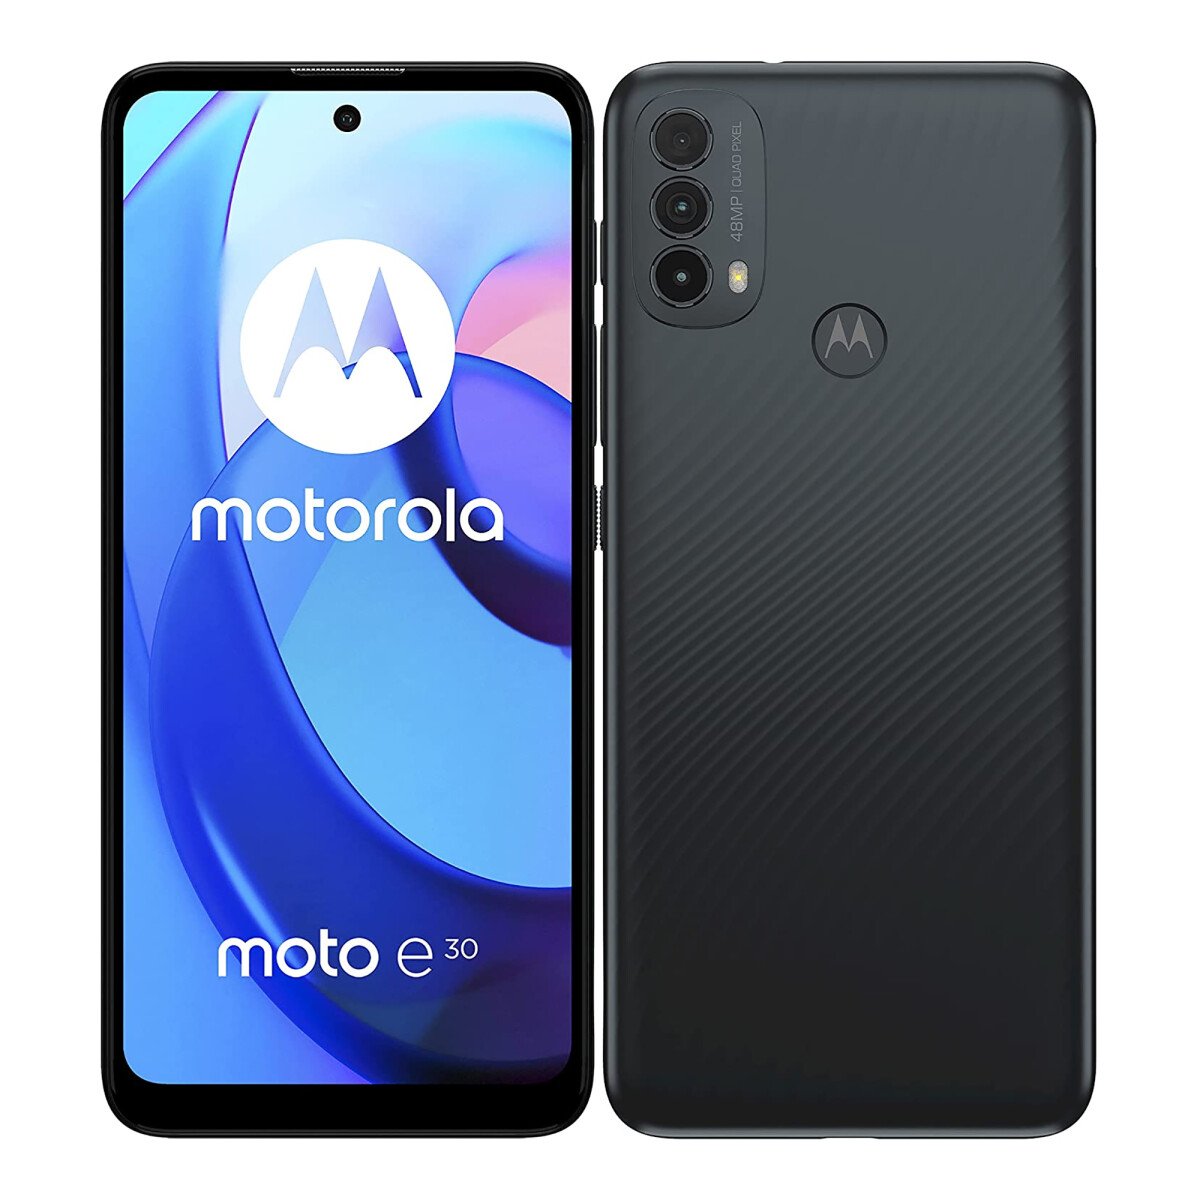 Motorola - Smartphone Moto E30 - 6,5'' Multitáctil Ips Lcd. Dualsim. 4G. 8 Core. Android 11. Ram 2GB - 001 